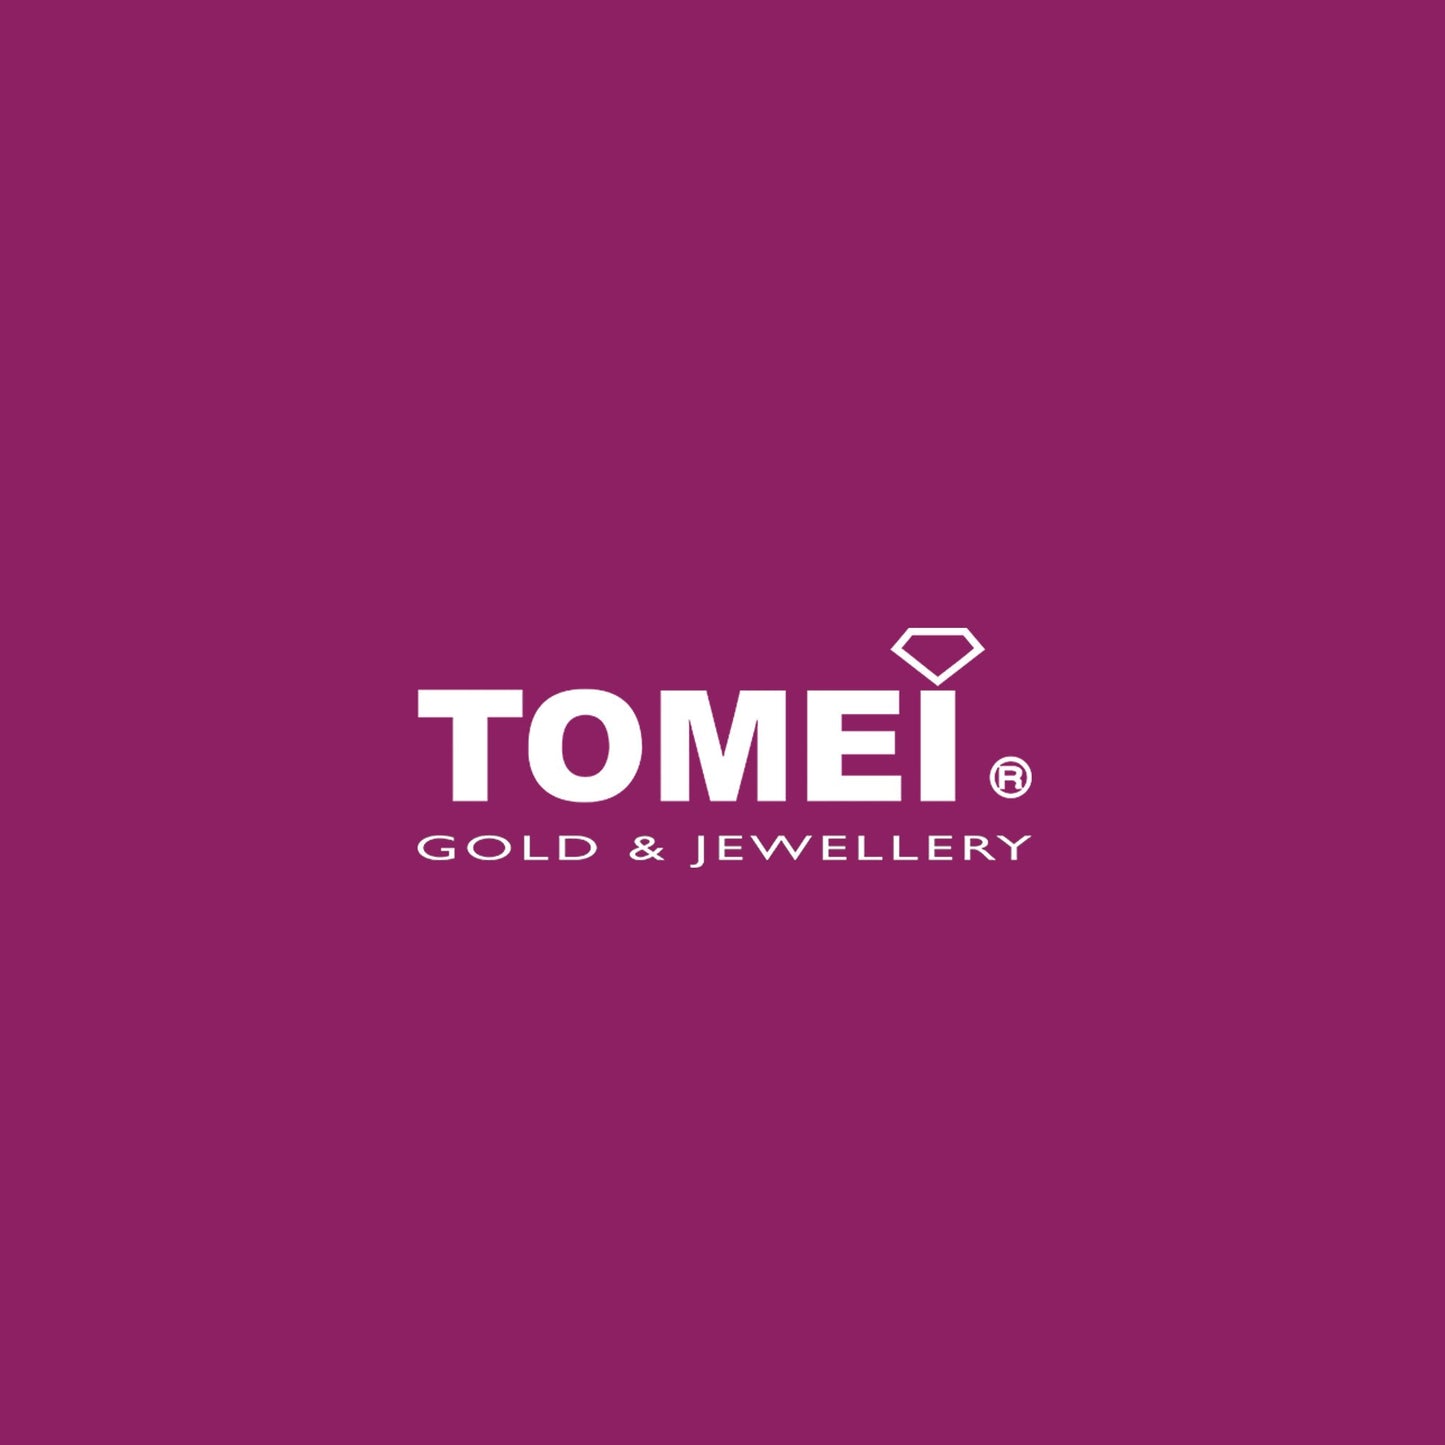 TOMEI Diamond Cut Collection Ribbon Stud Earrings, Yellow Gold 916